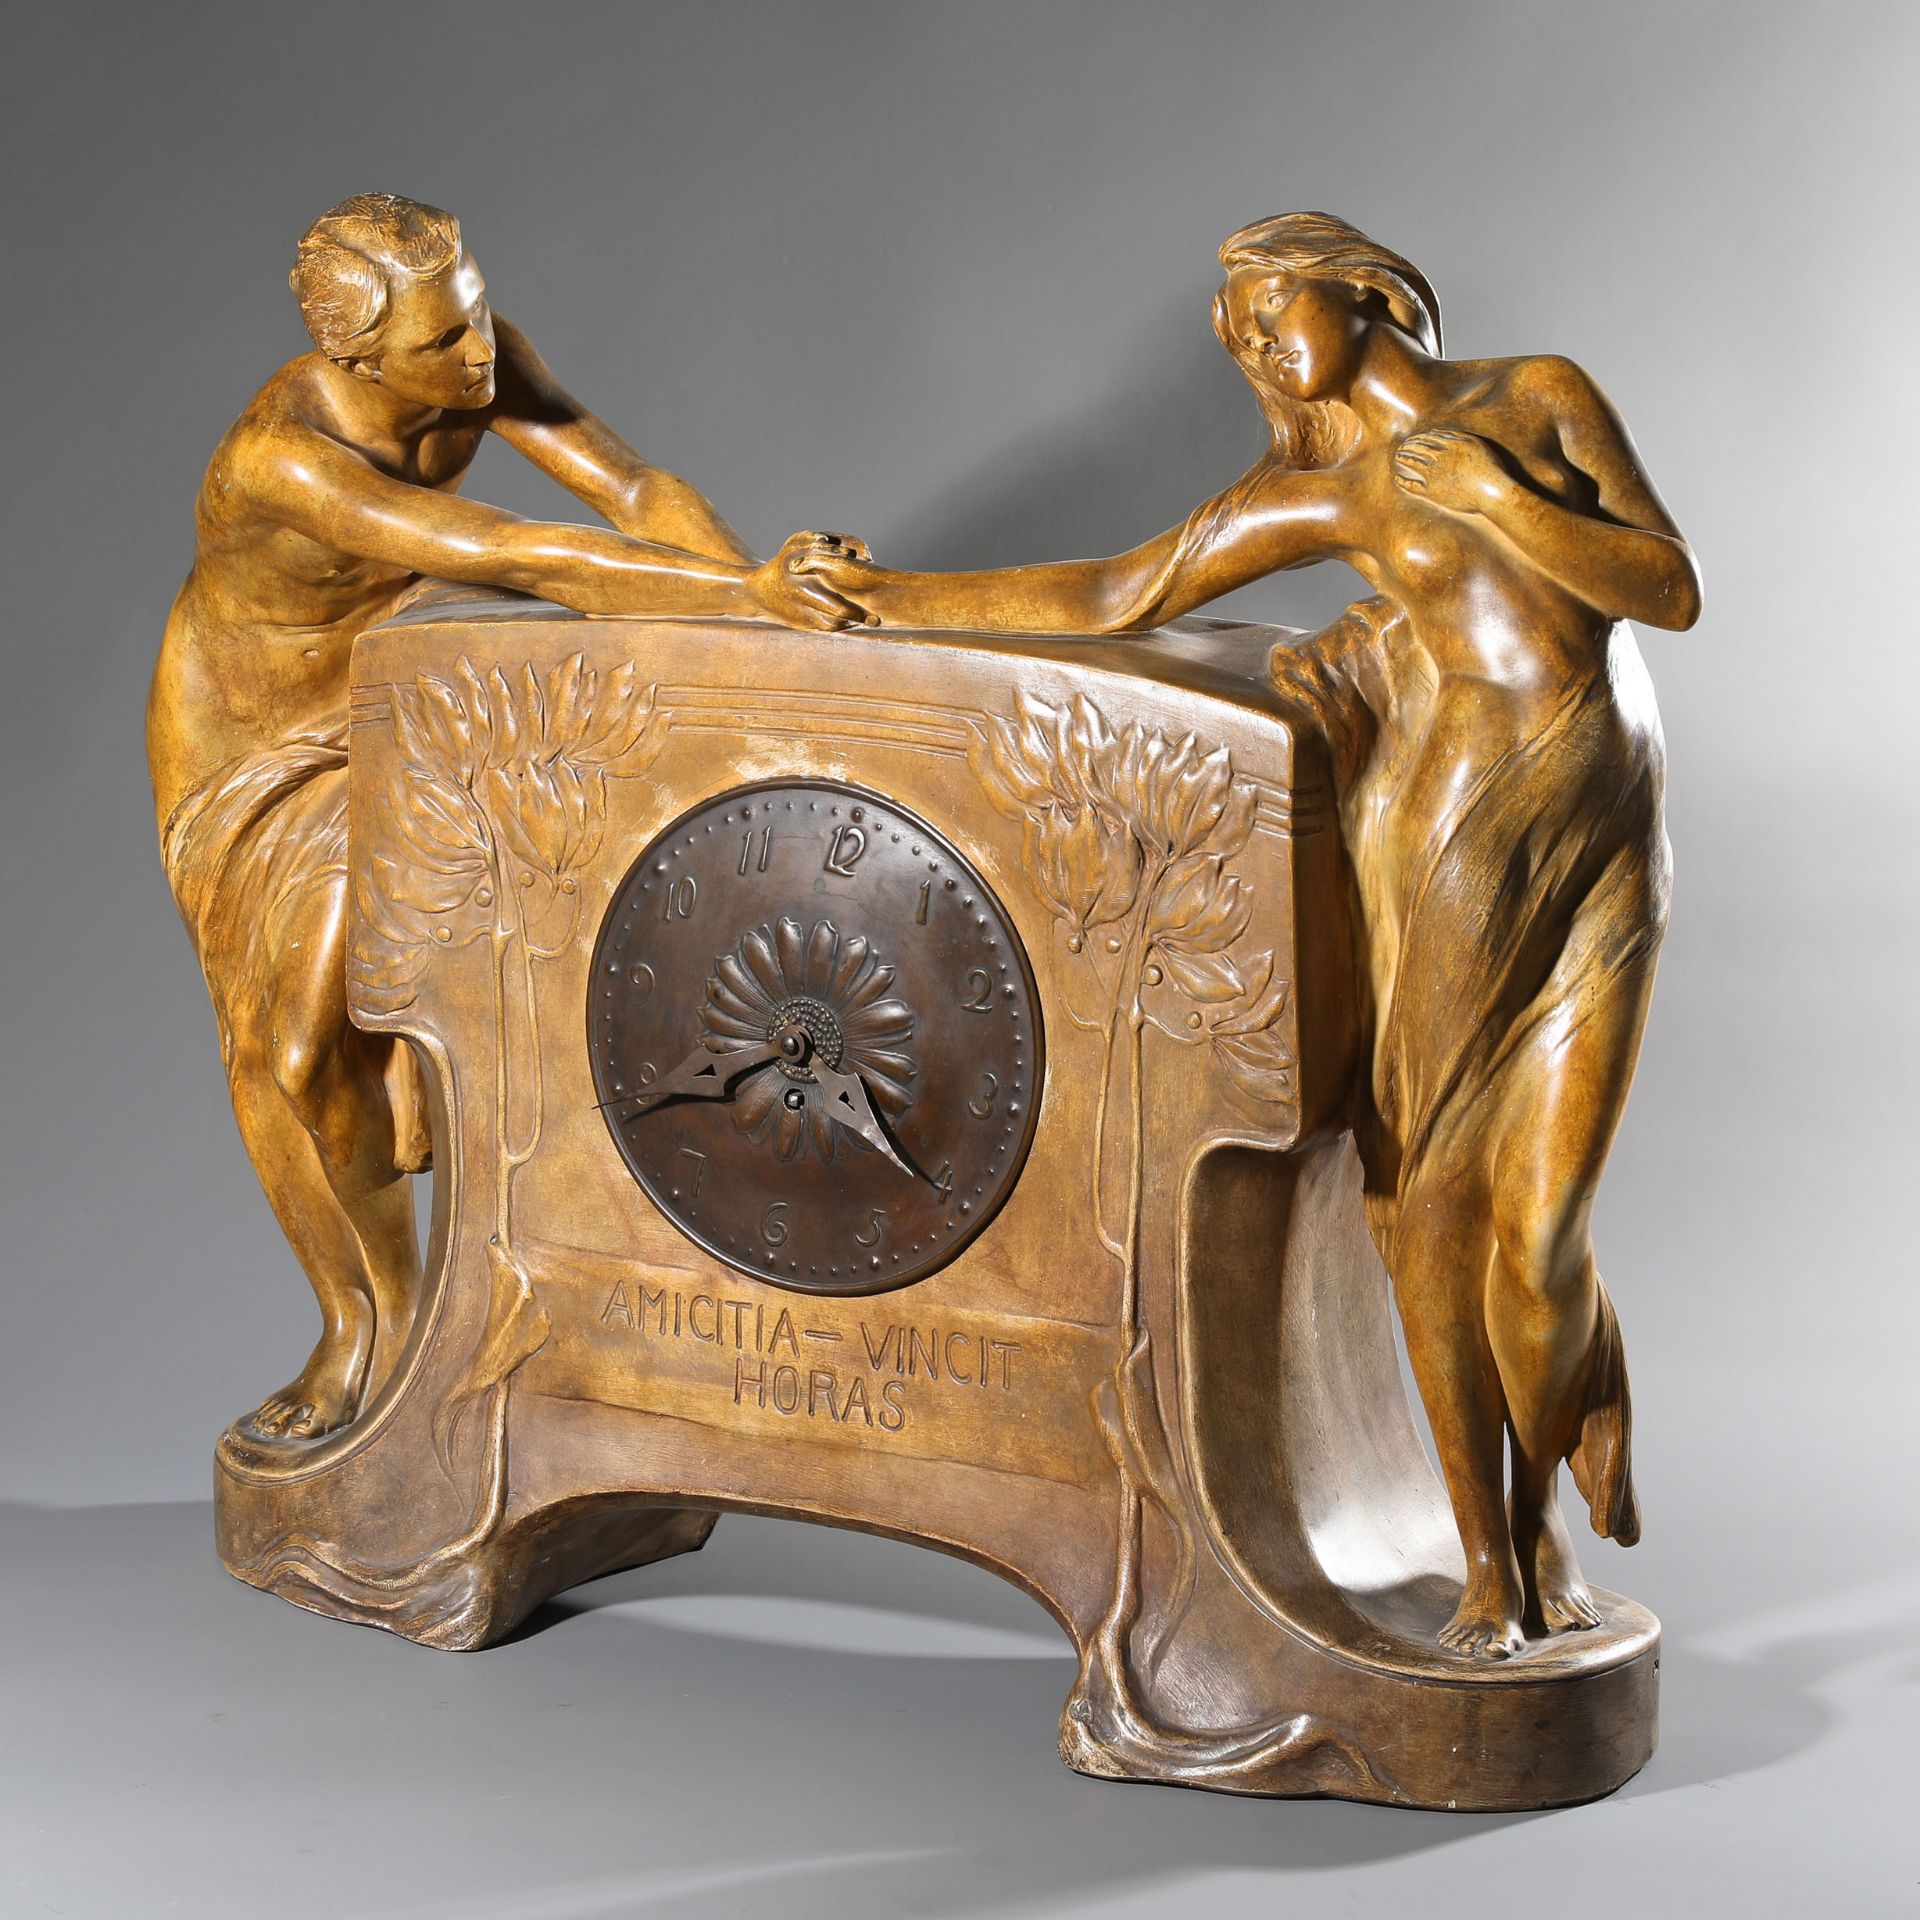 Friedrich Goldscheider, Simon, countertop Clock Amicitia Vincit Horas - Image 2 of 8